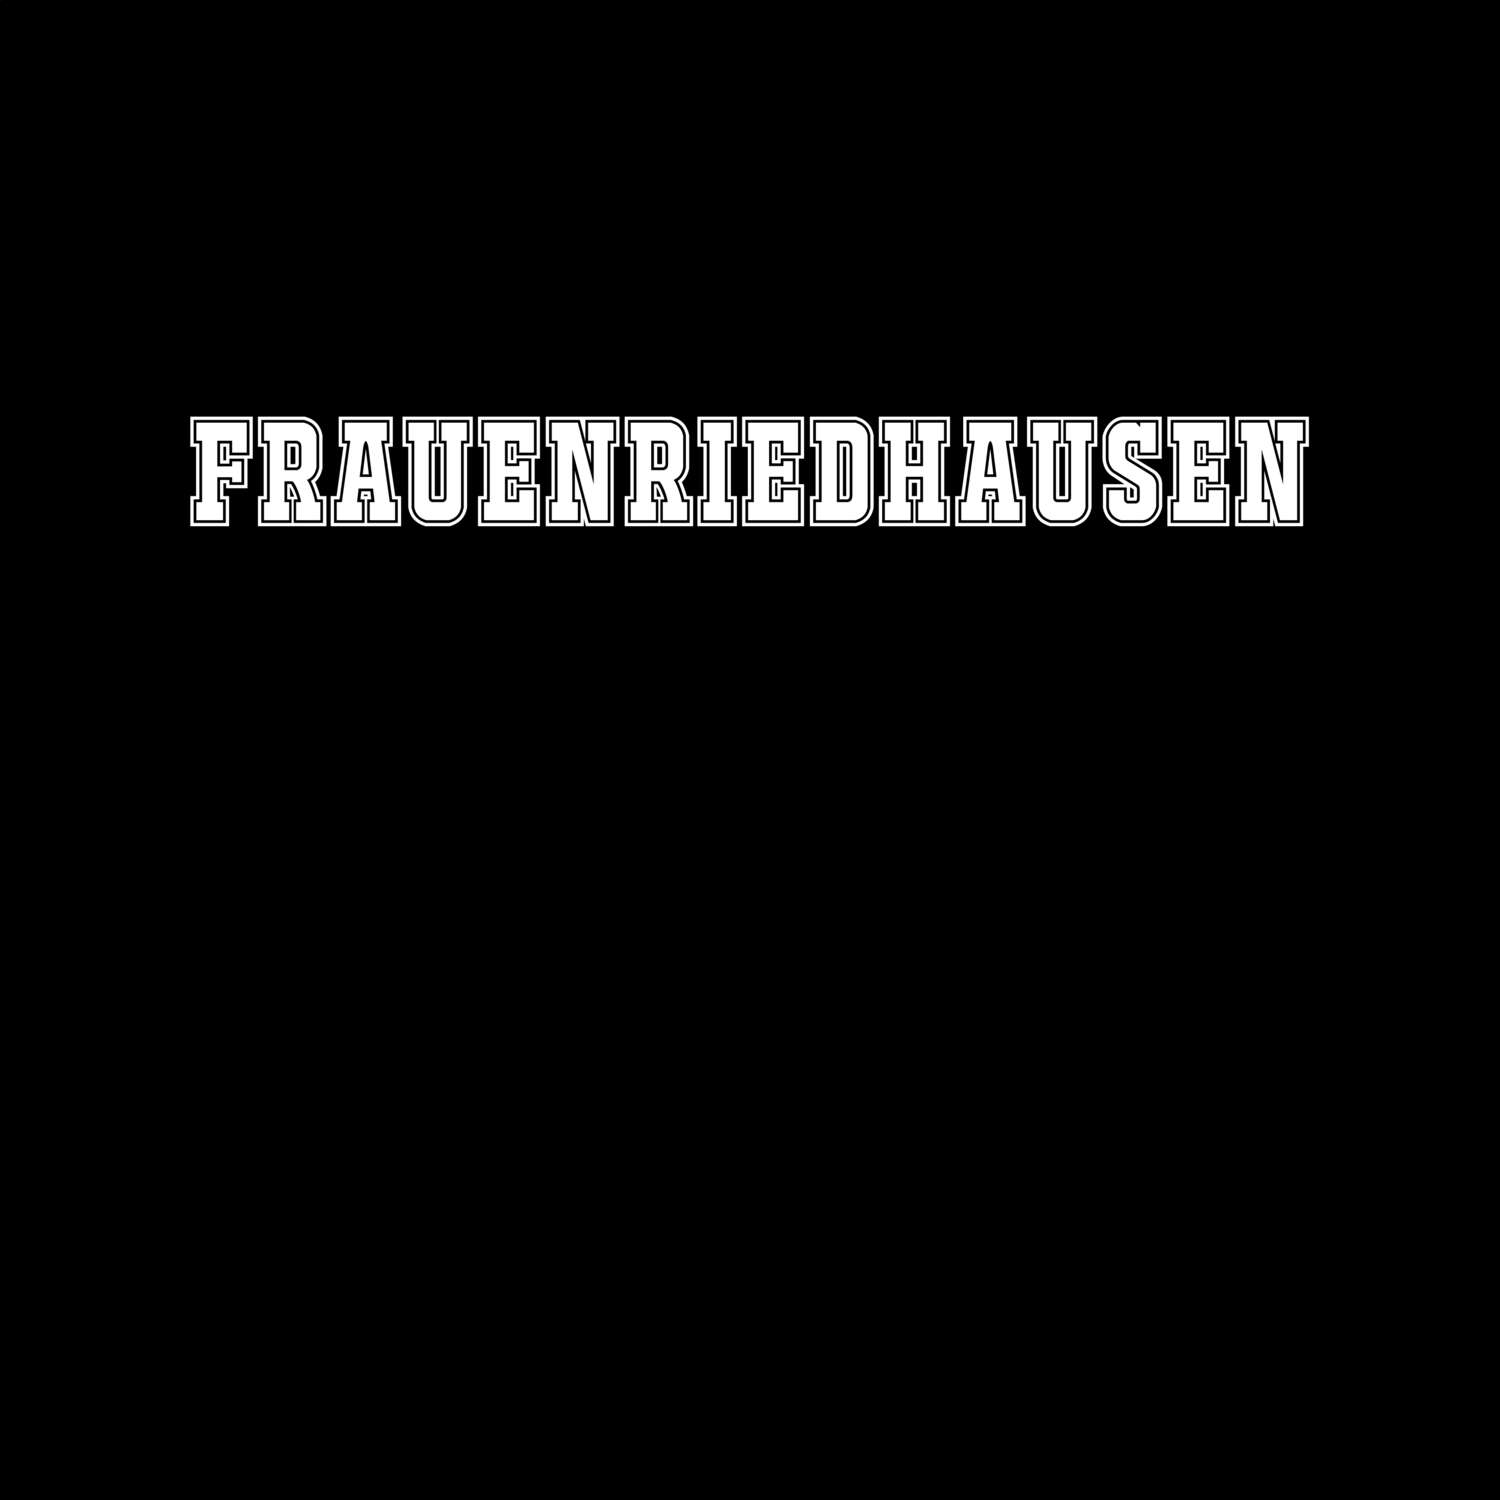 Frauenriedhausen T-Shirt »Classic«